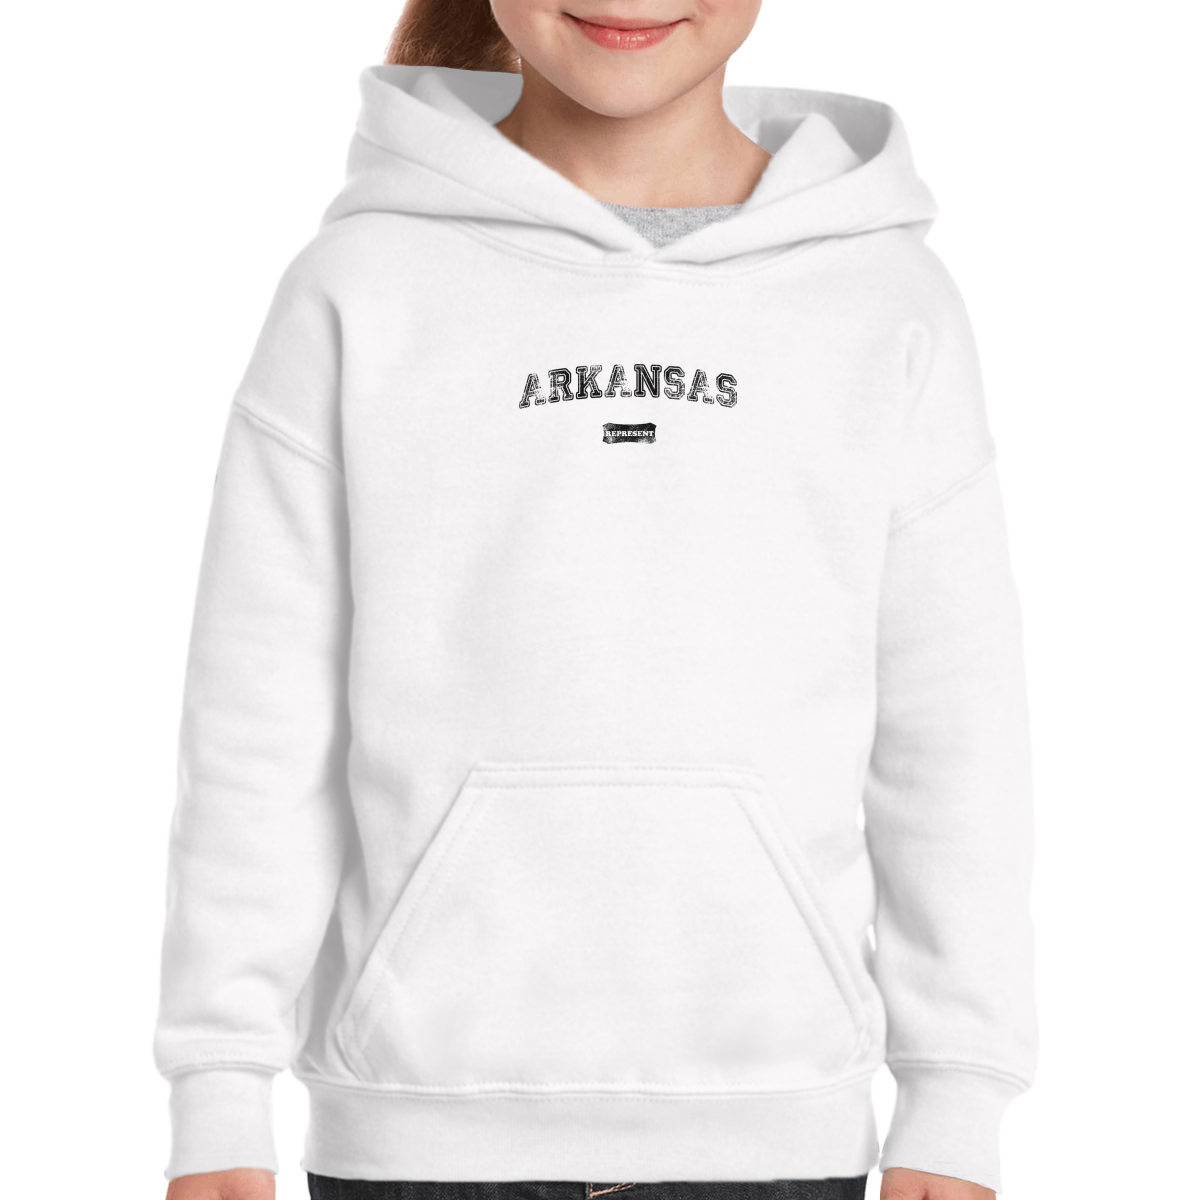 Arkansas Represent Kids Hoodie | White